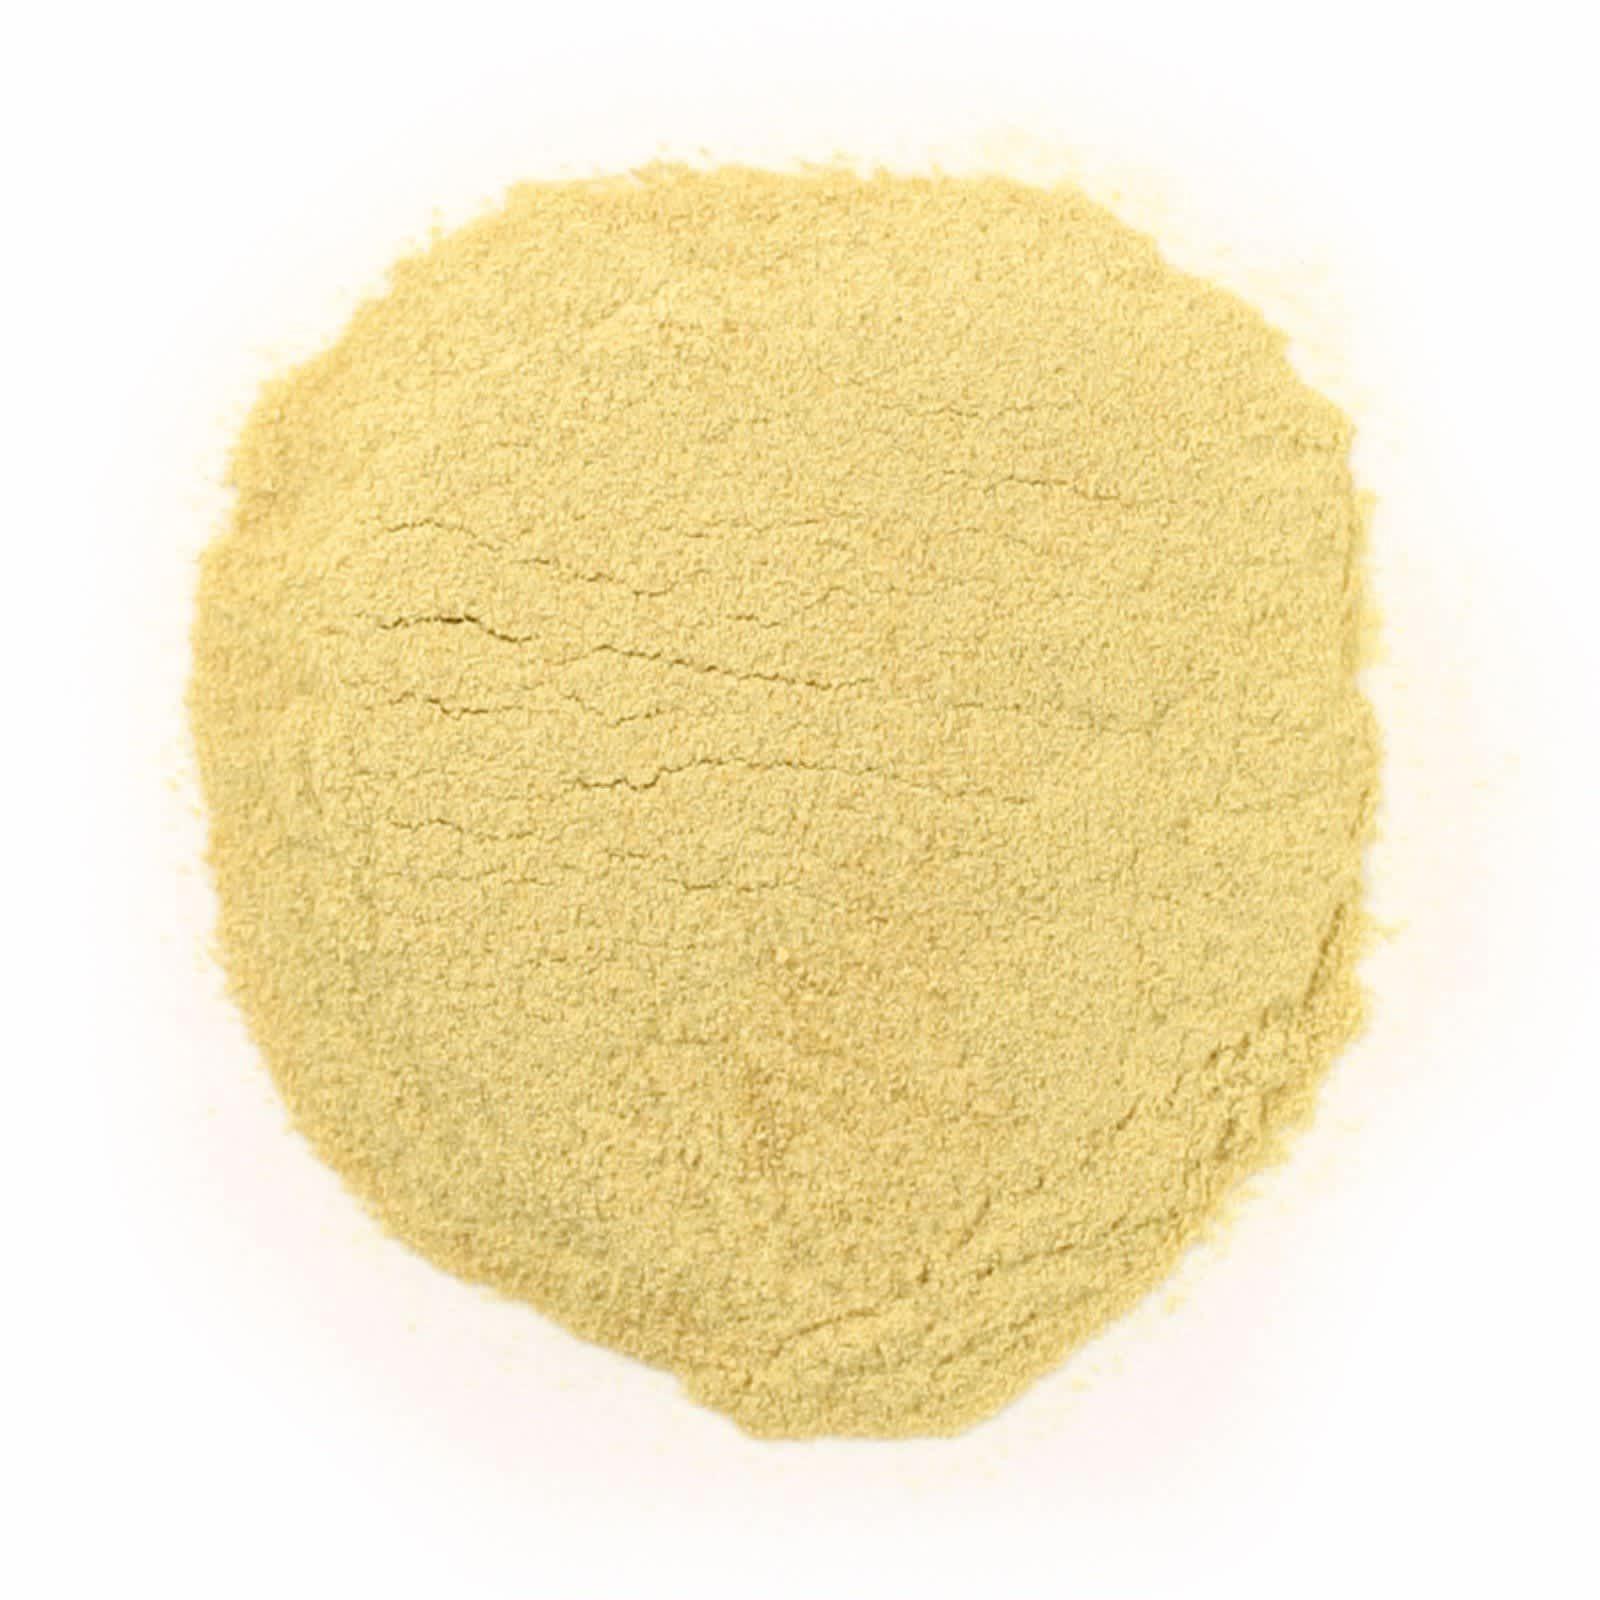 Frontier Co-Op, Nutritional Yeast Powder, 16 oz (453 g)